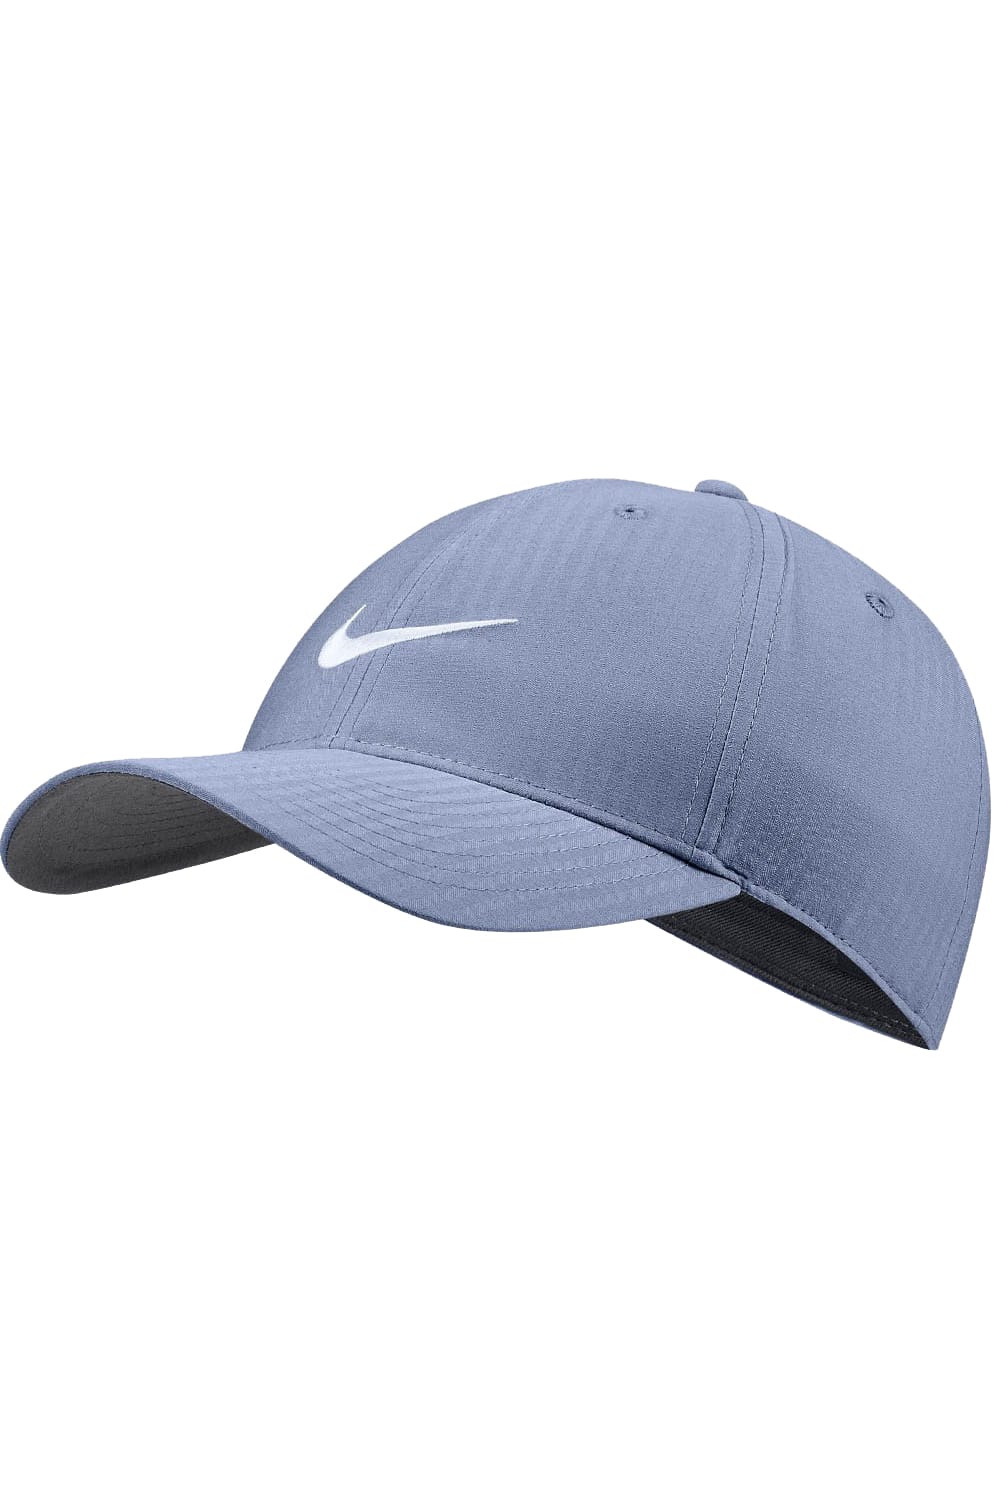 Nike Legacy 91 Snapback Cap (Indigo Fog)